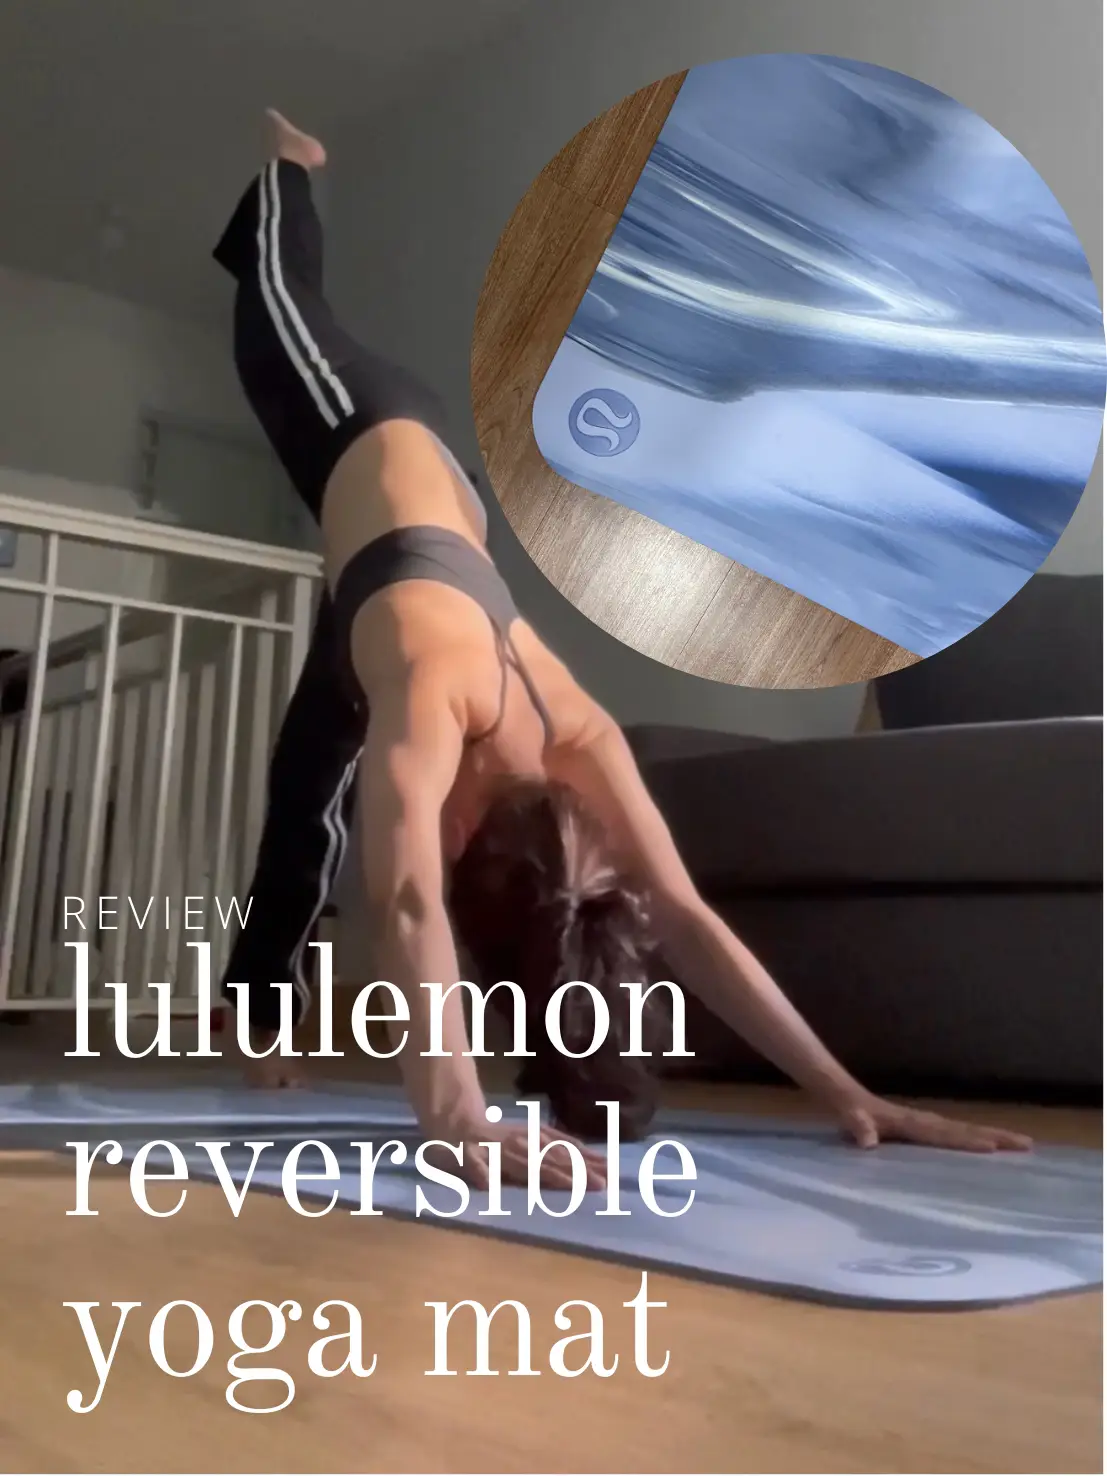 Lululemon Yoga Mat Review - The Reversible Mat